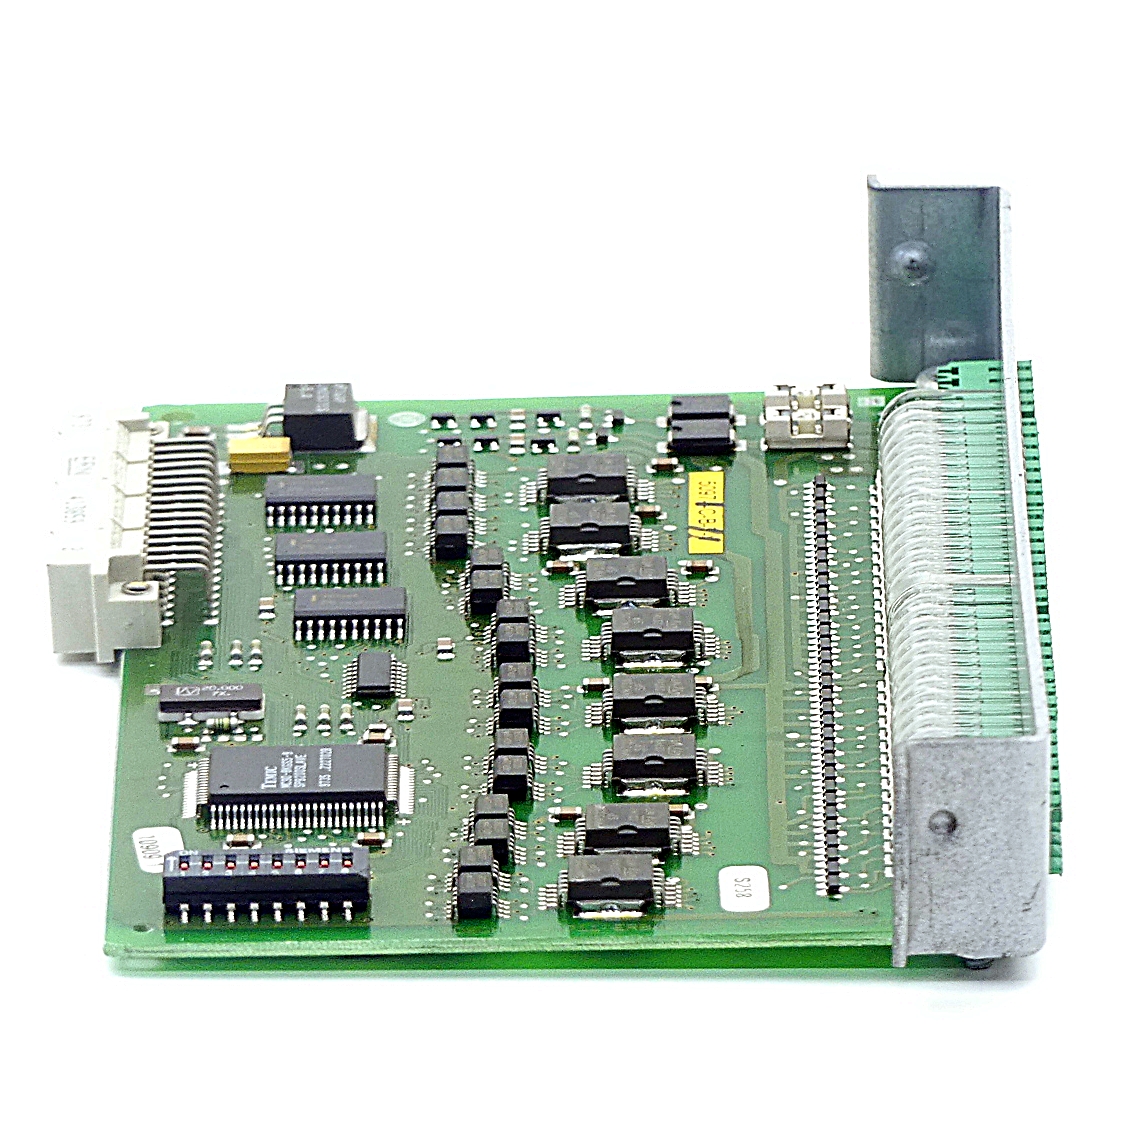 Output module A24V-C.5A 